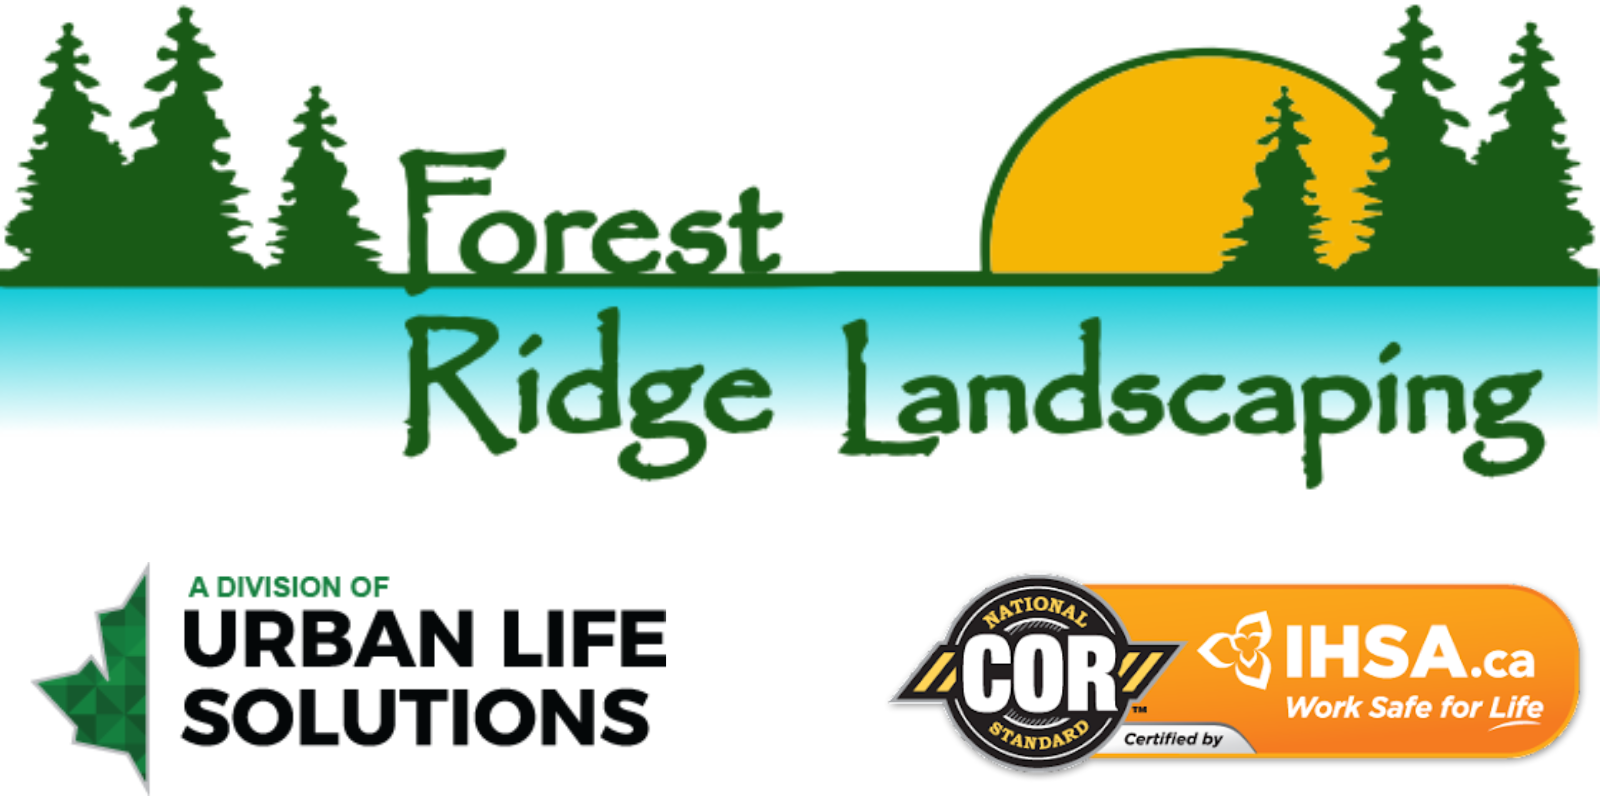 Forest Ridge Landscaping logo